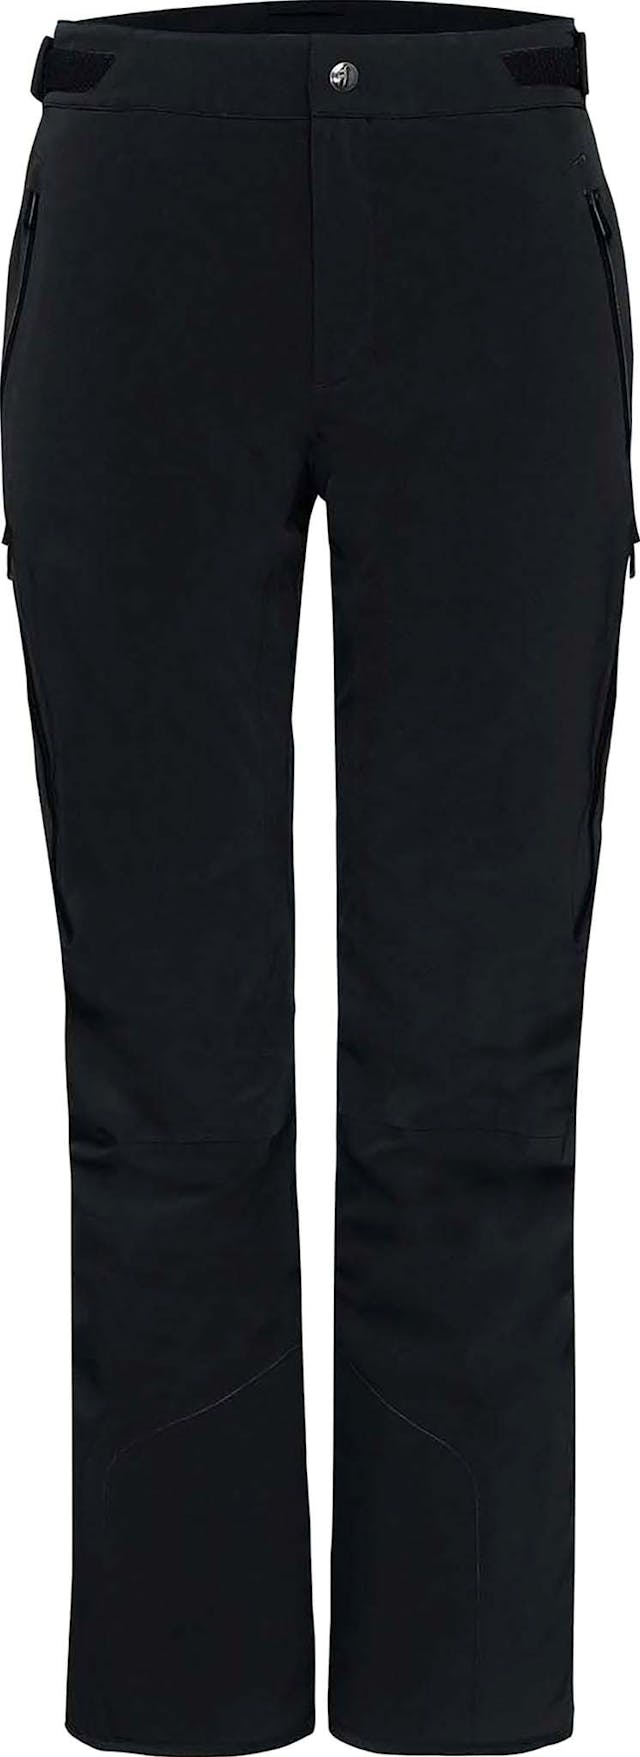 Product image for Nicky Ski Pants - Men's